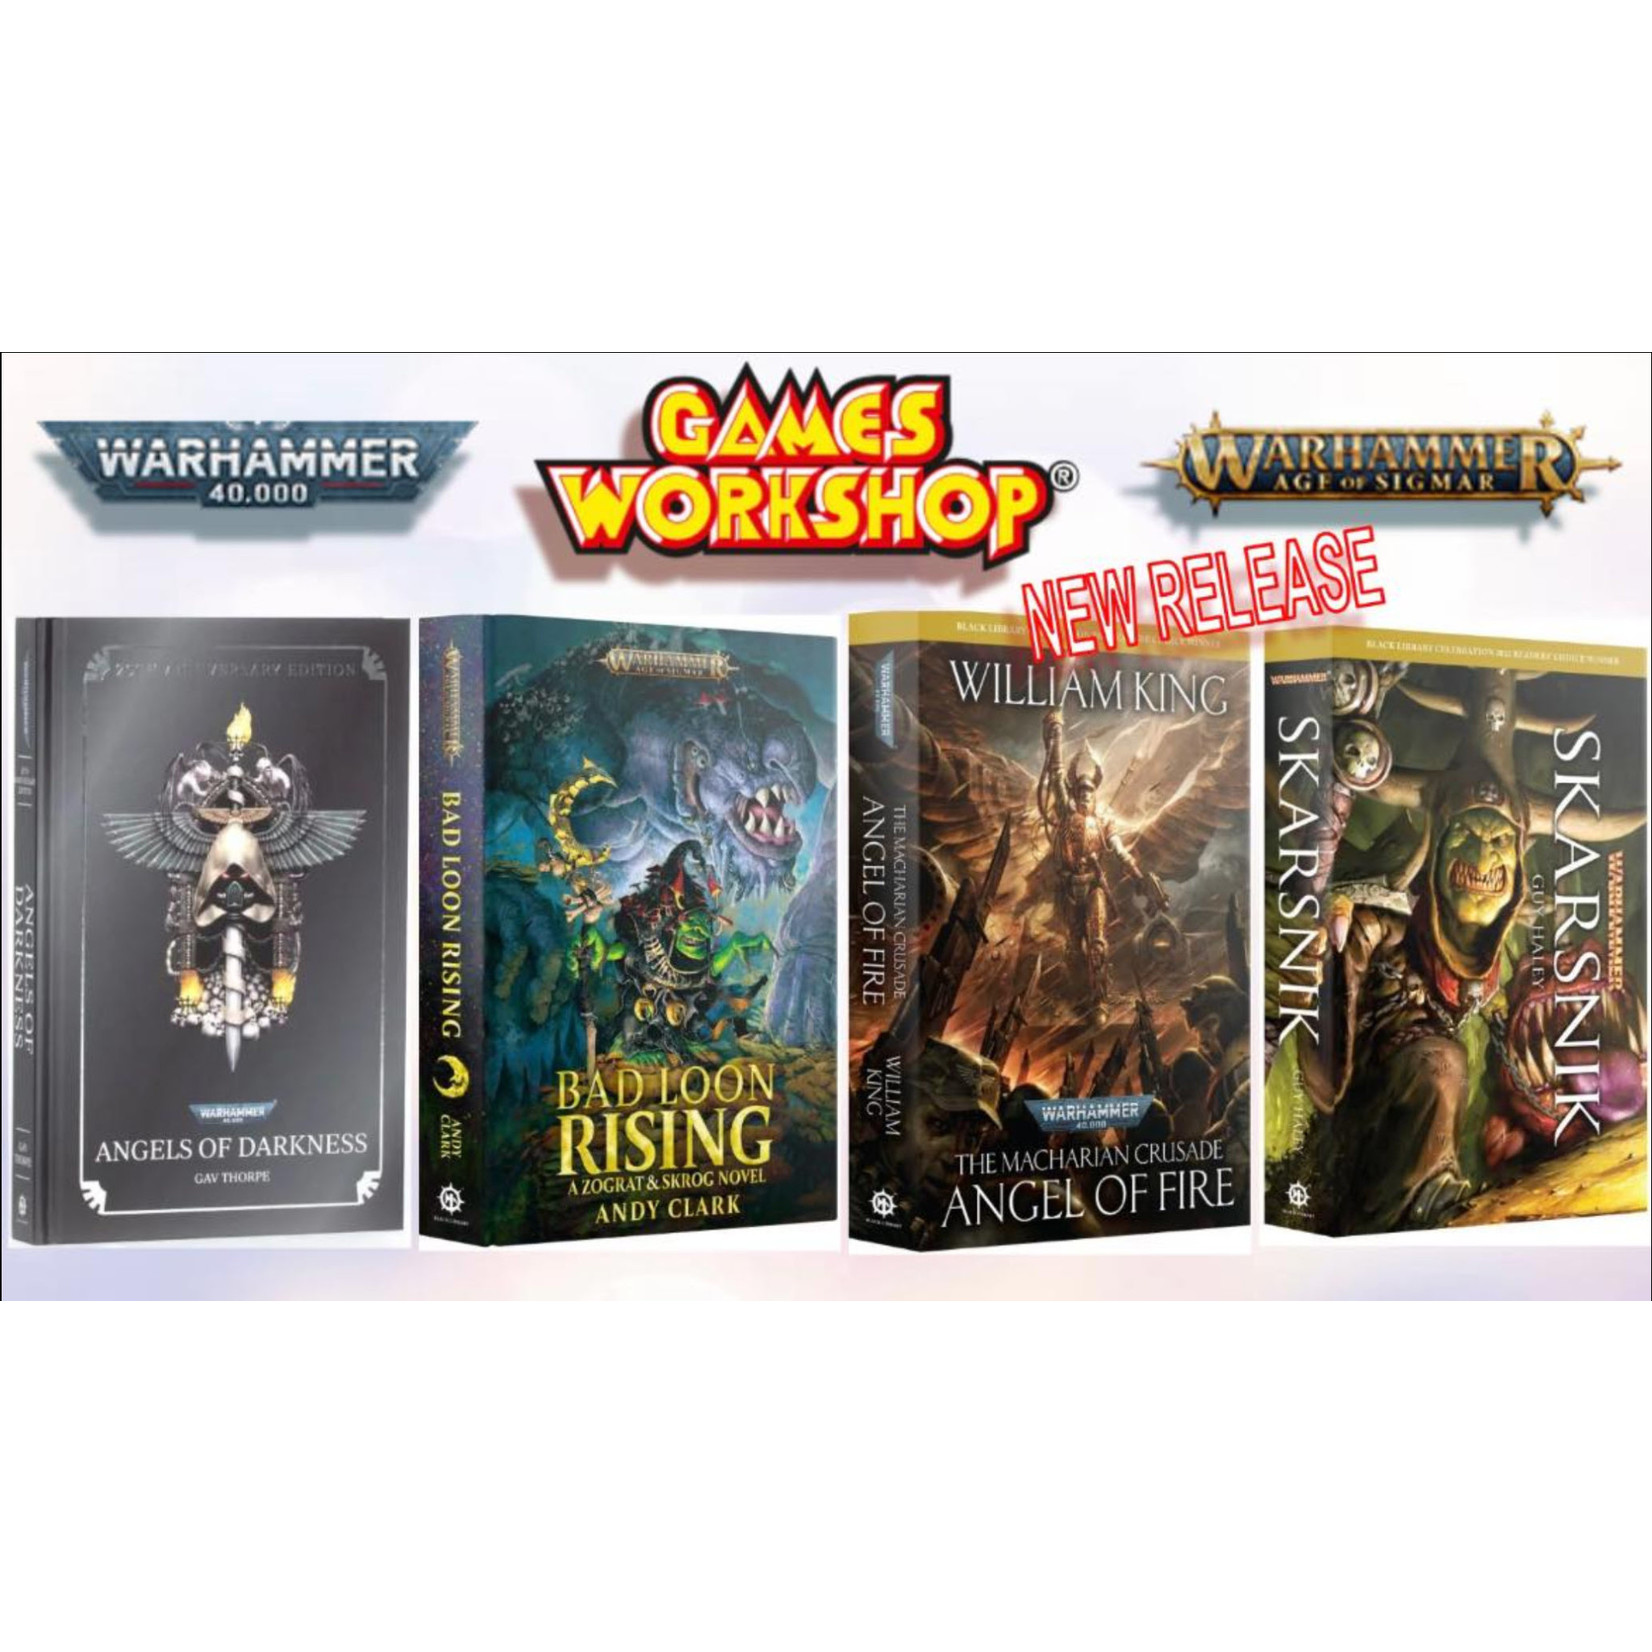 Games Workshop Feb 25 release